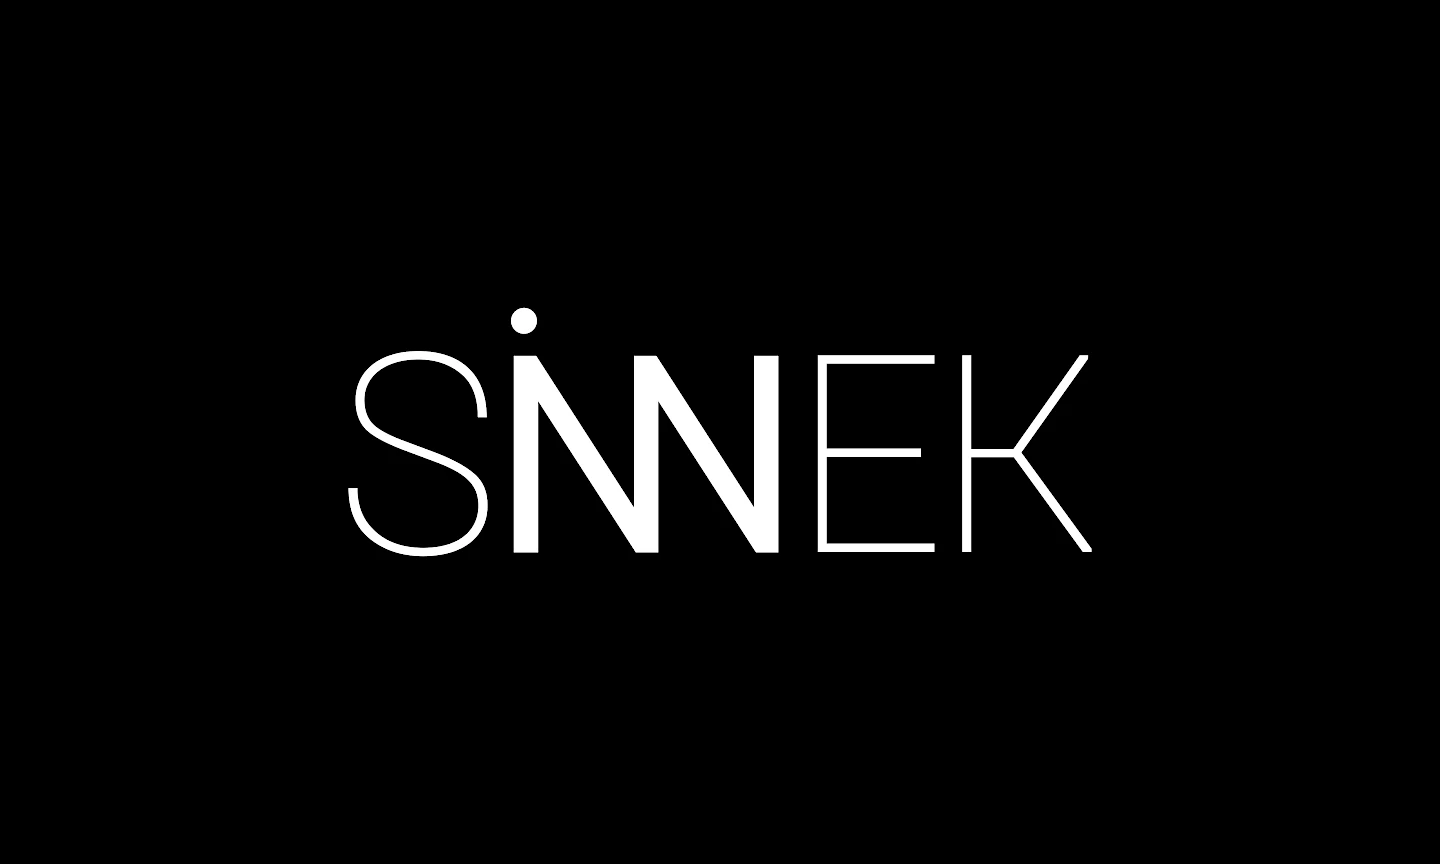 move sinnek 1 logo black branding 